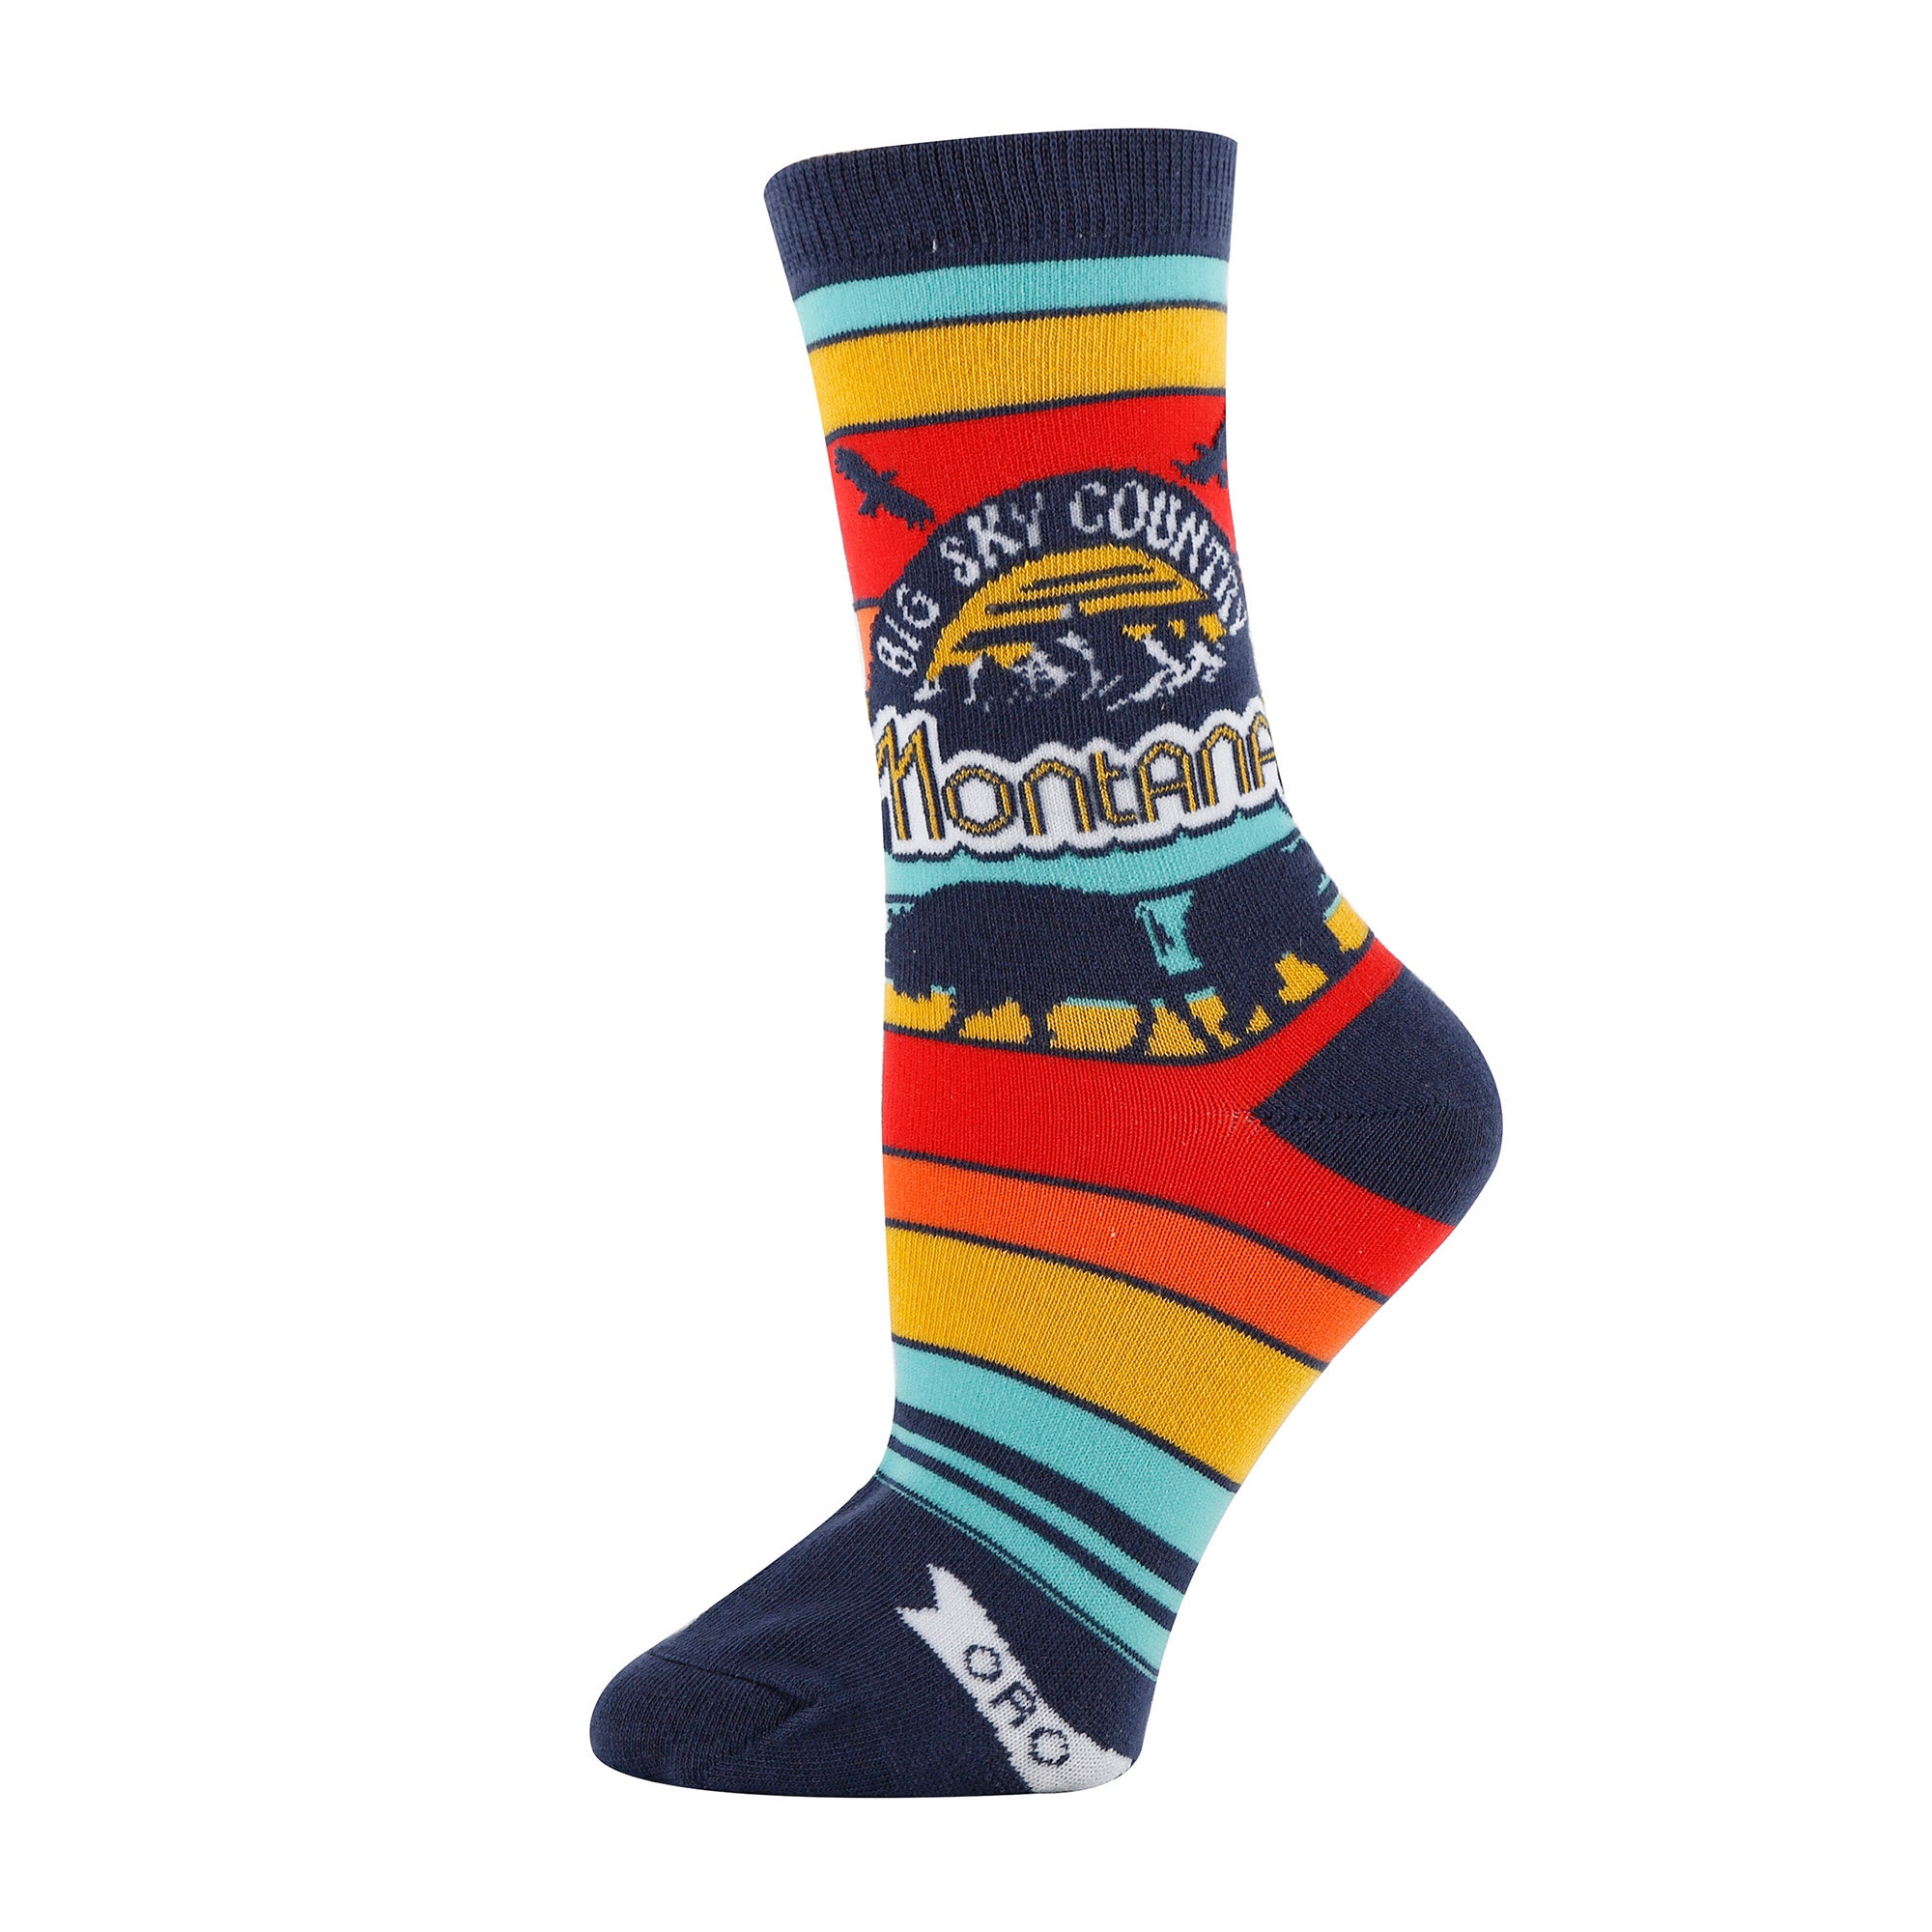 Montana Socks